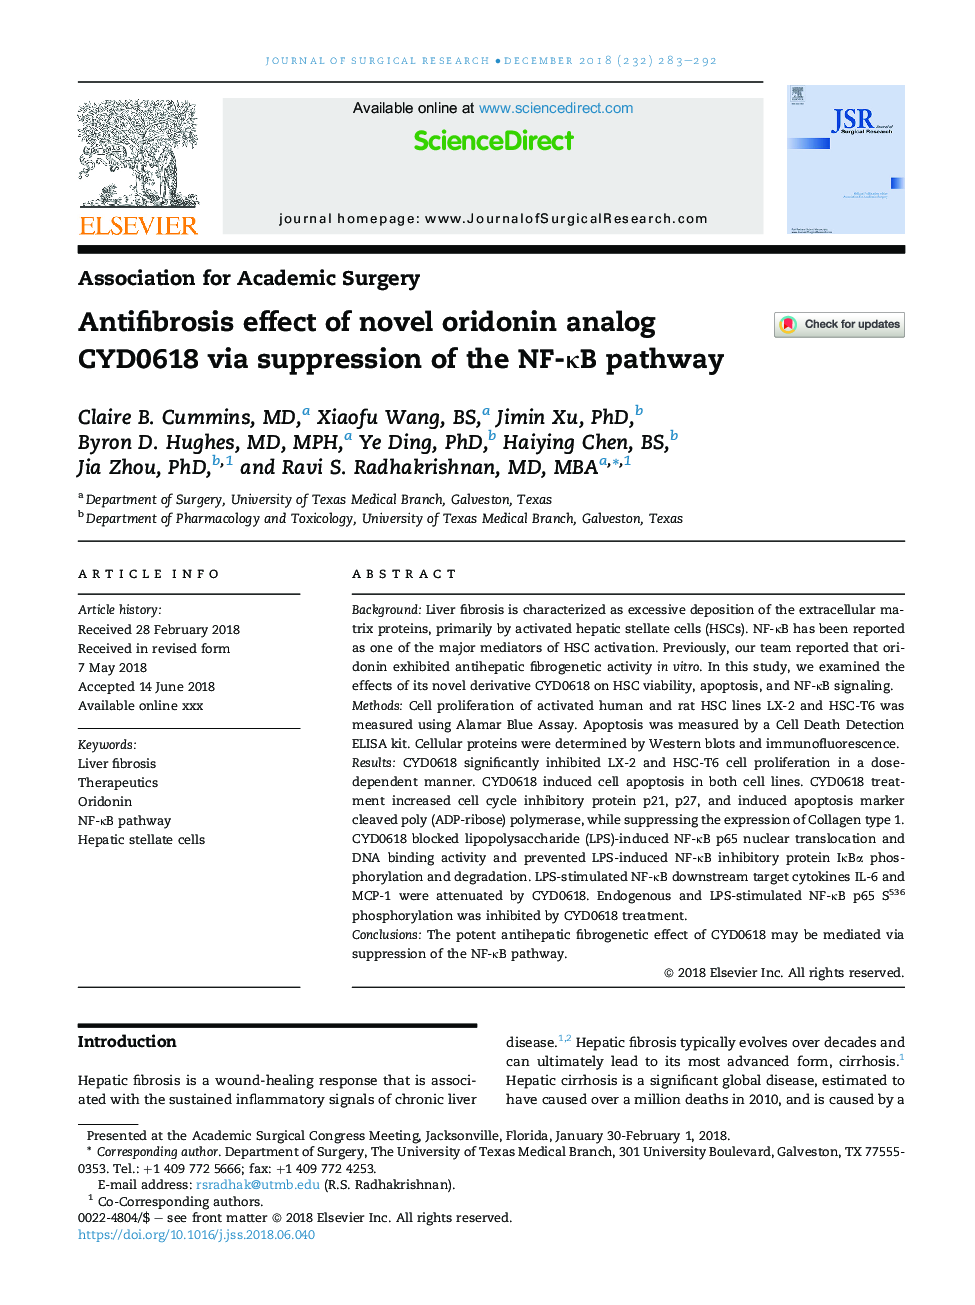 Antifibrosis effect of novel oridonin analog CYD0618 via suppression of the NF-ÎºB pathway